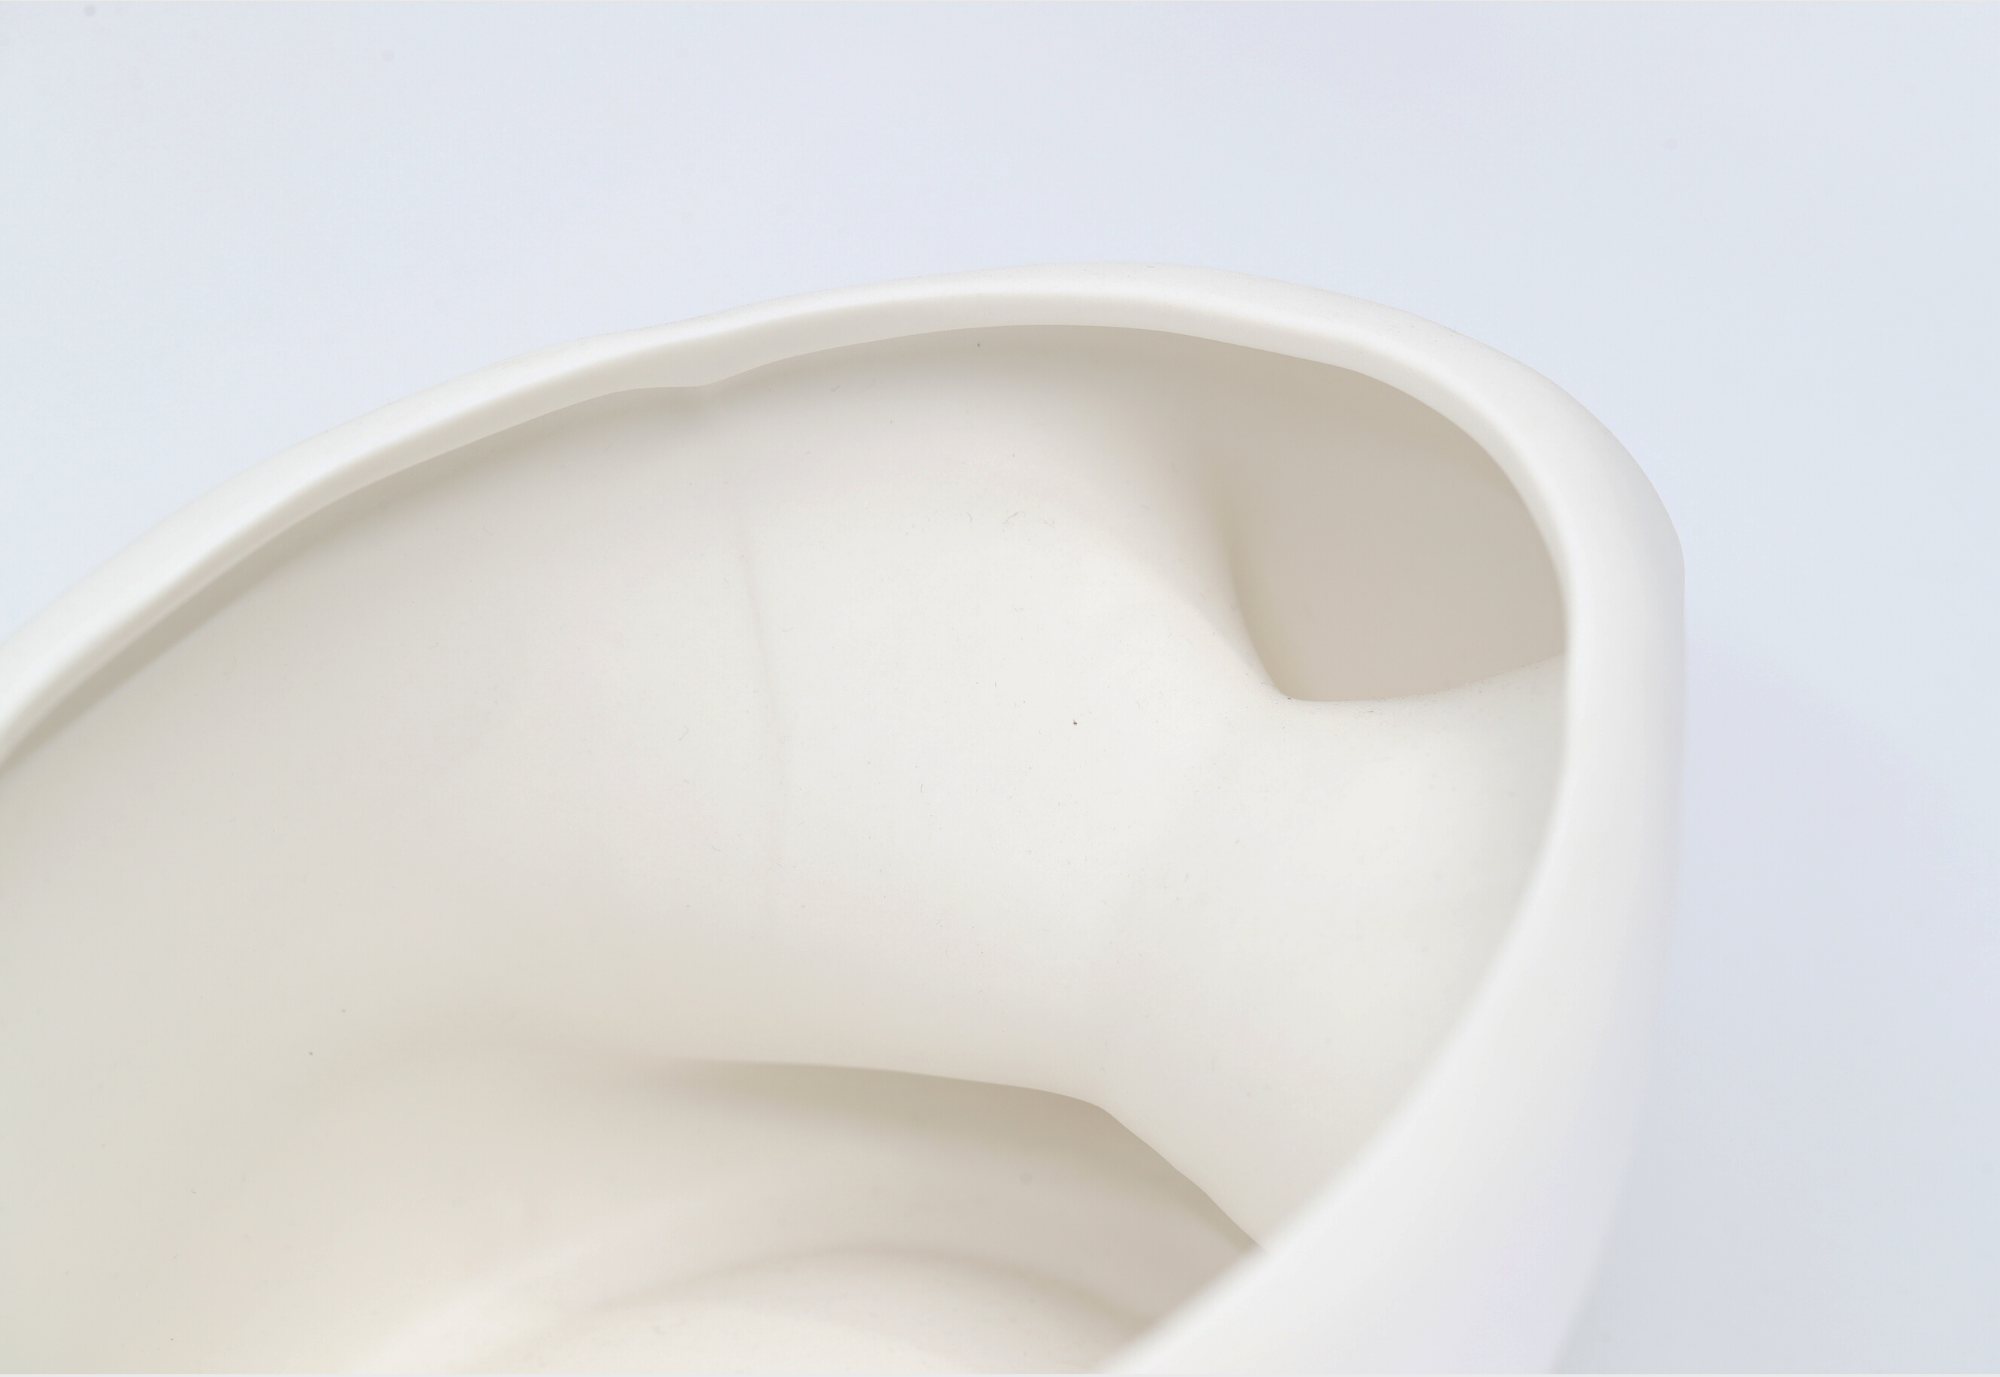 Ceramic Vase | Short Double Handle Vessel